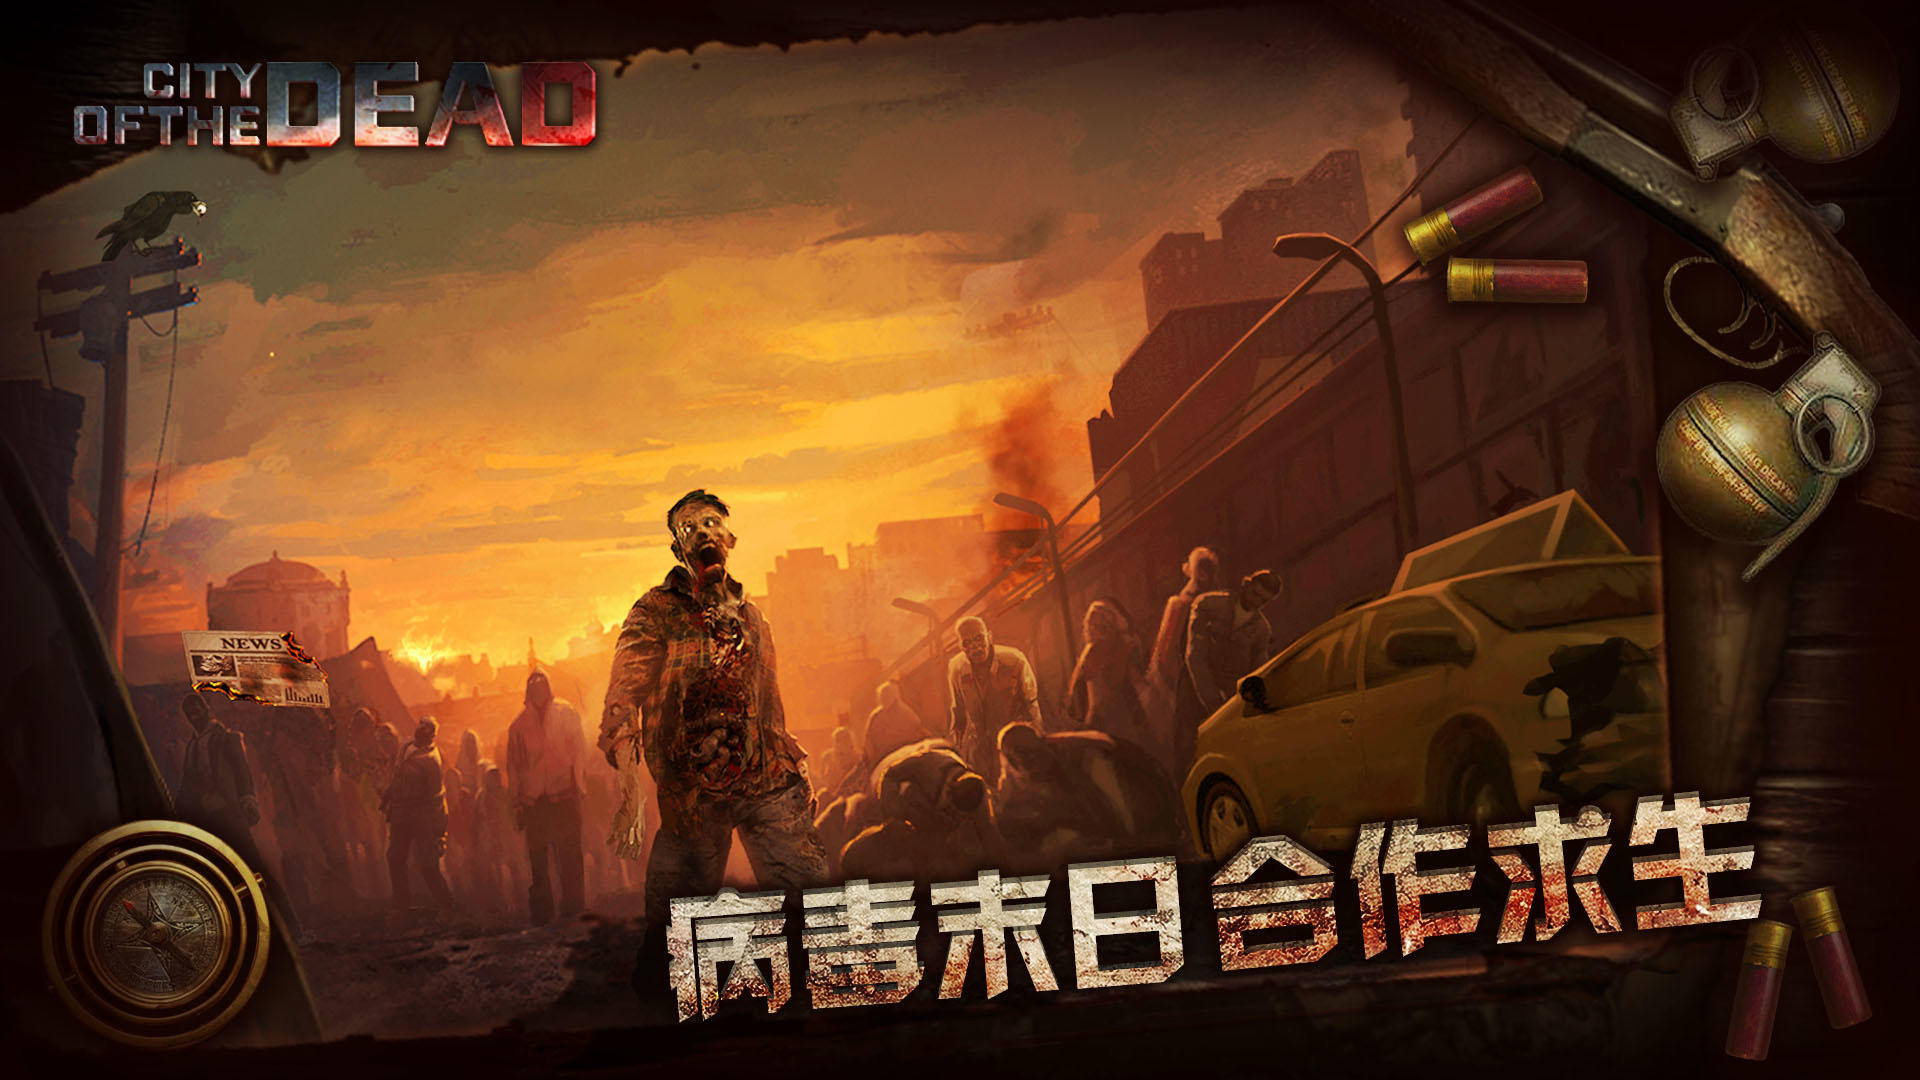 Screenshot 1 of bandar zombi 